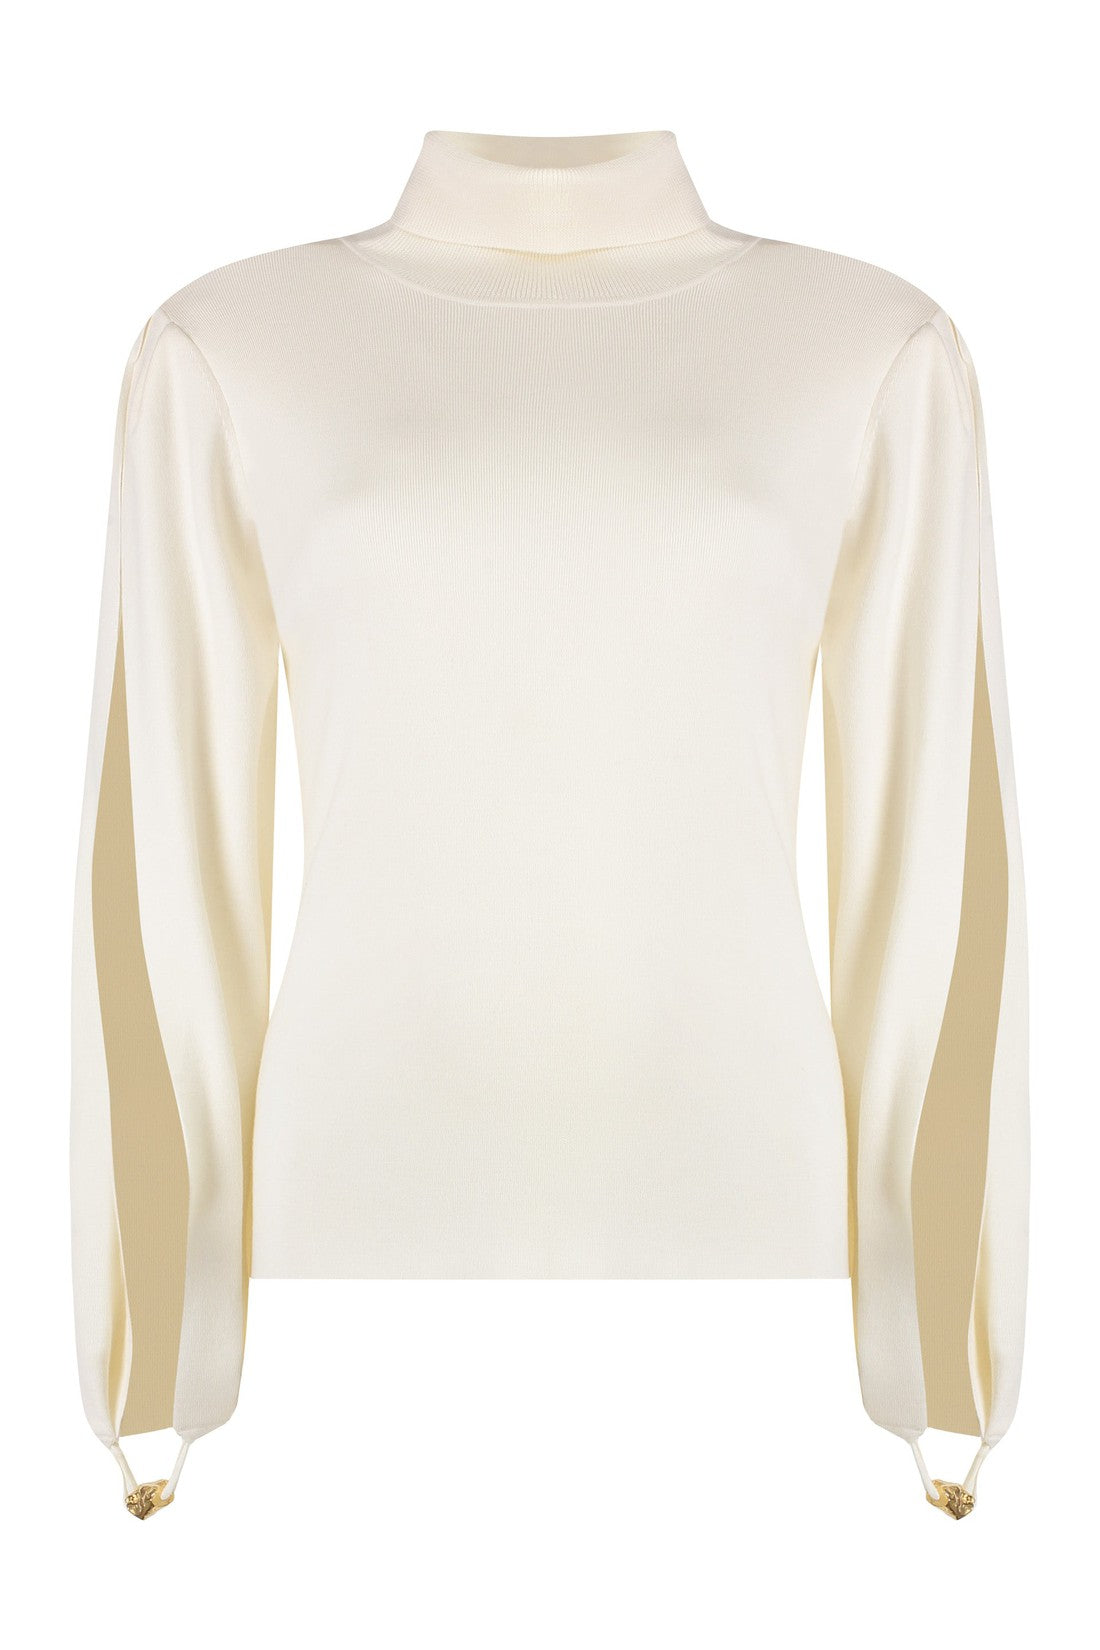 Chloé-OUTLET-SALE-Wool turtleneck sweater-ARCHIVIST